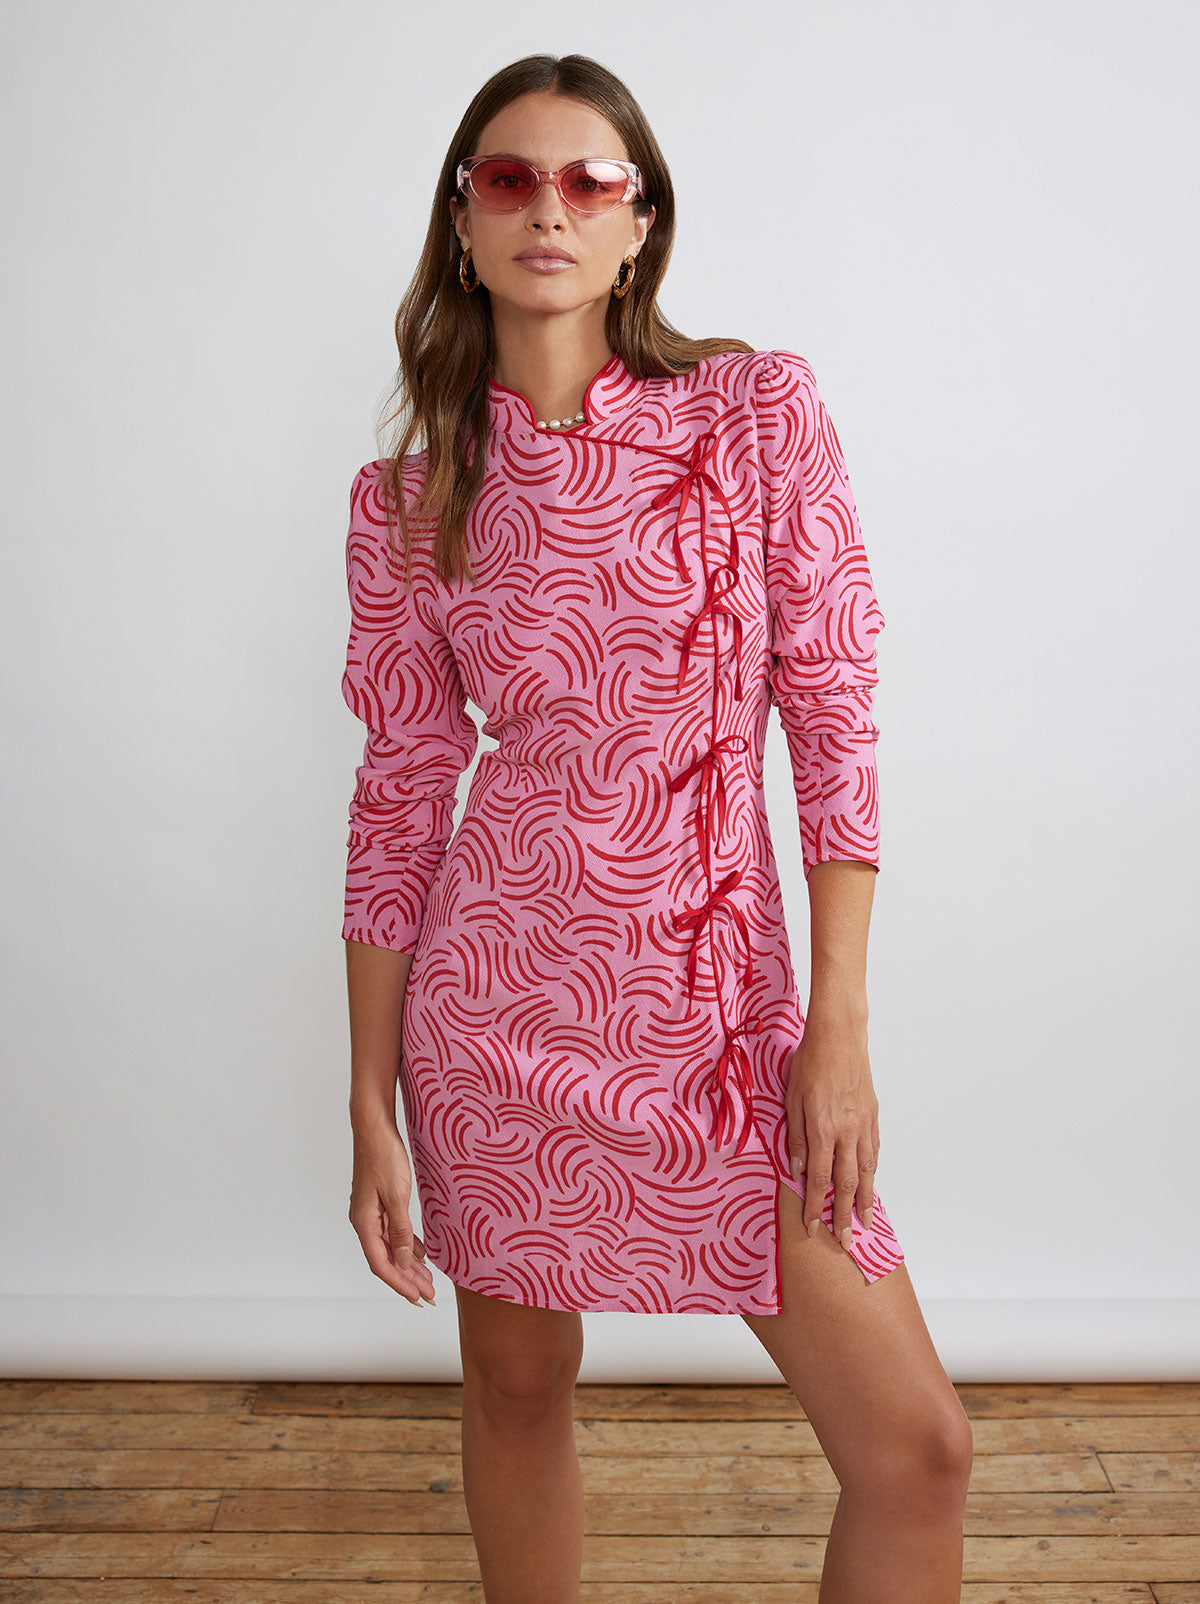 Allegra Pink Geo Mini Dress By KITRI Studio